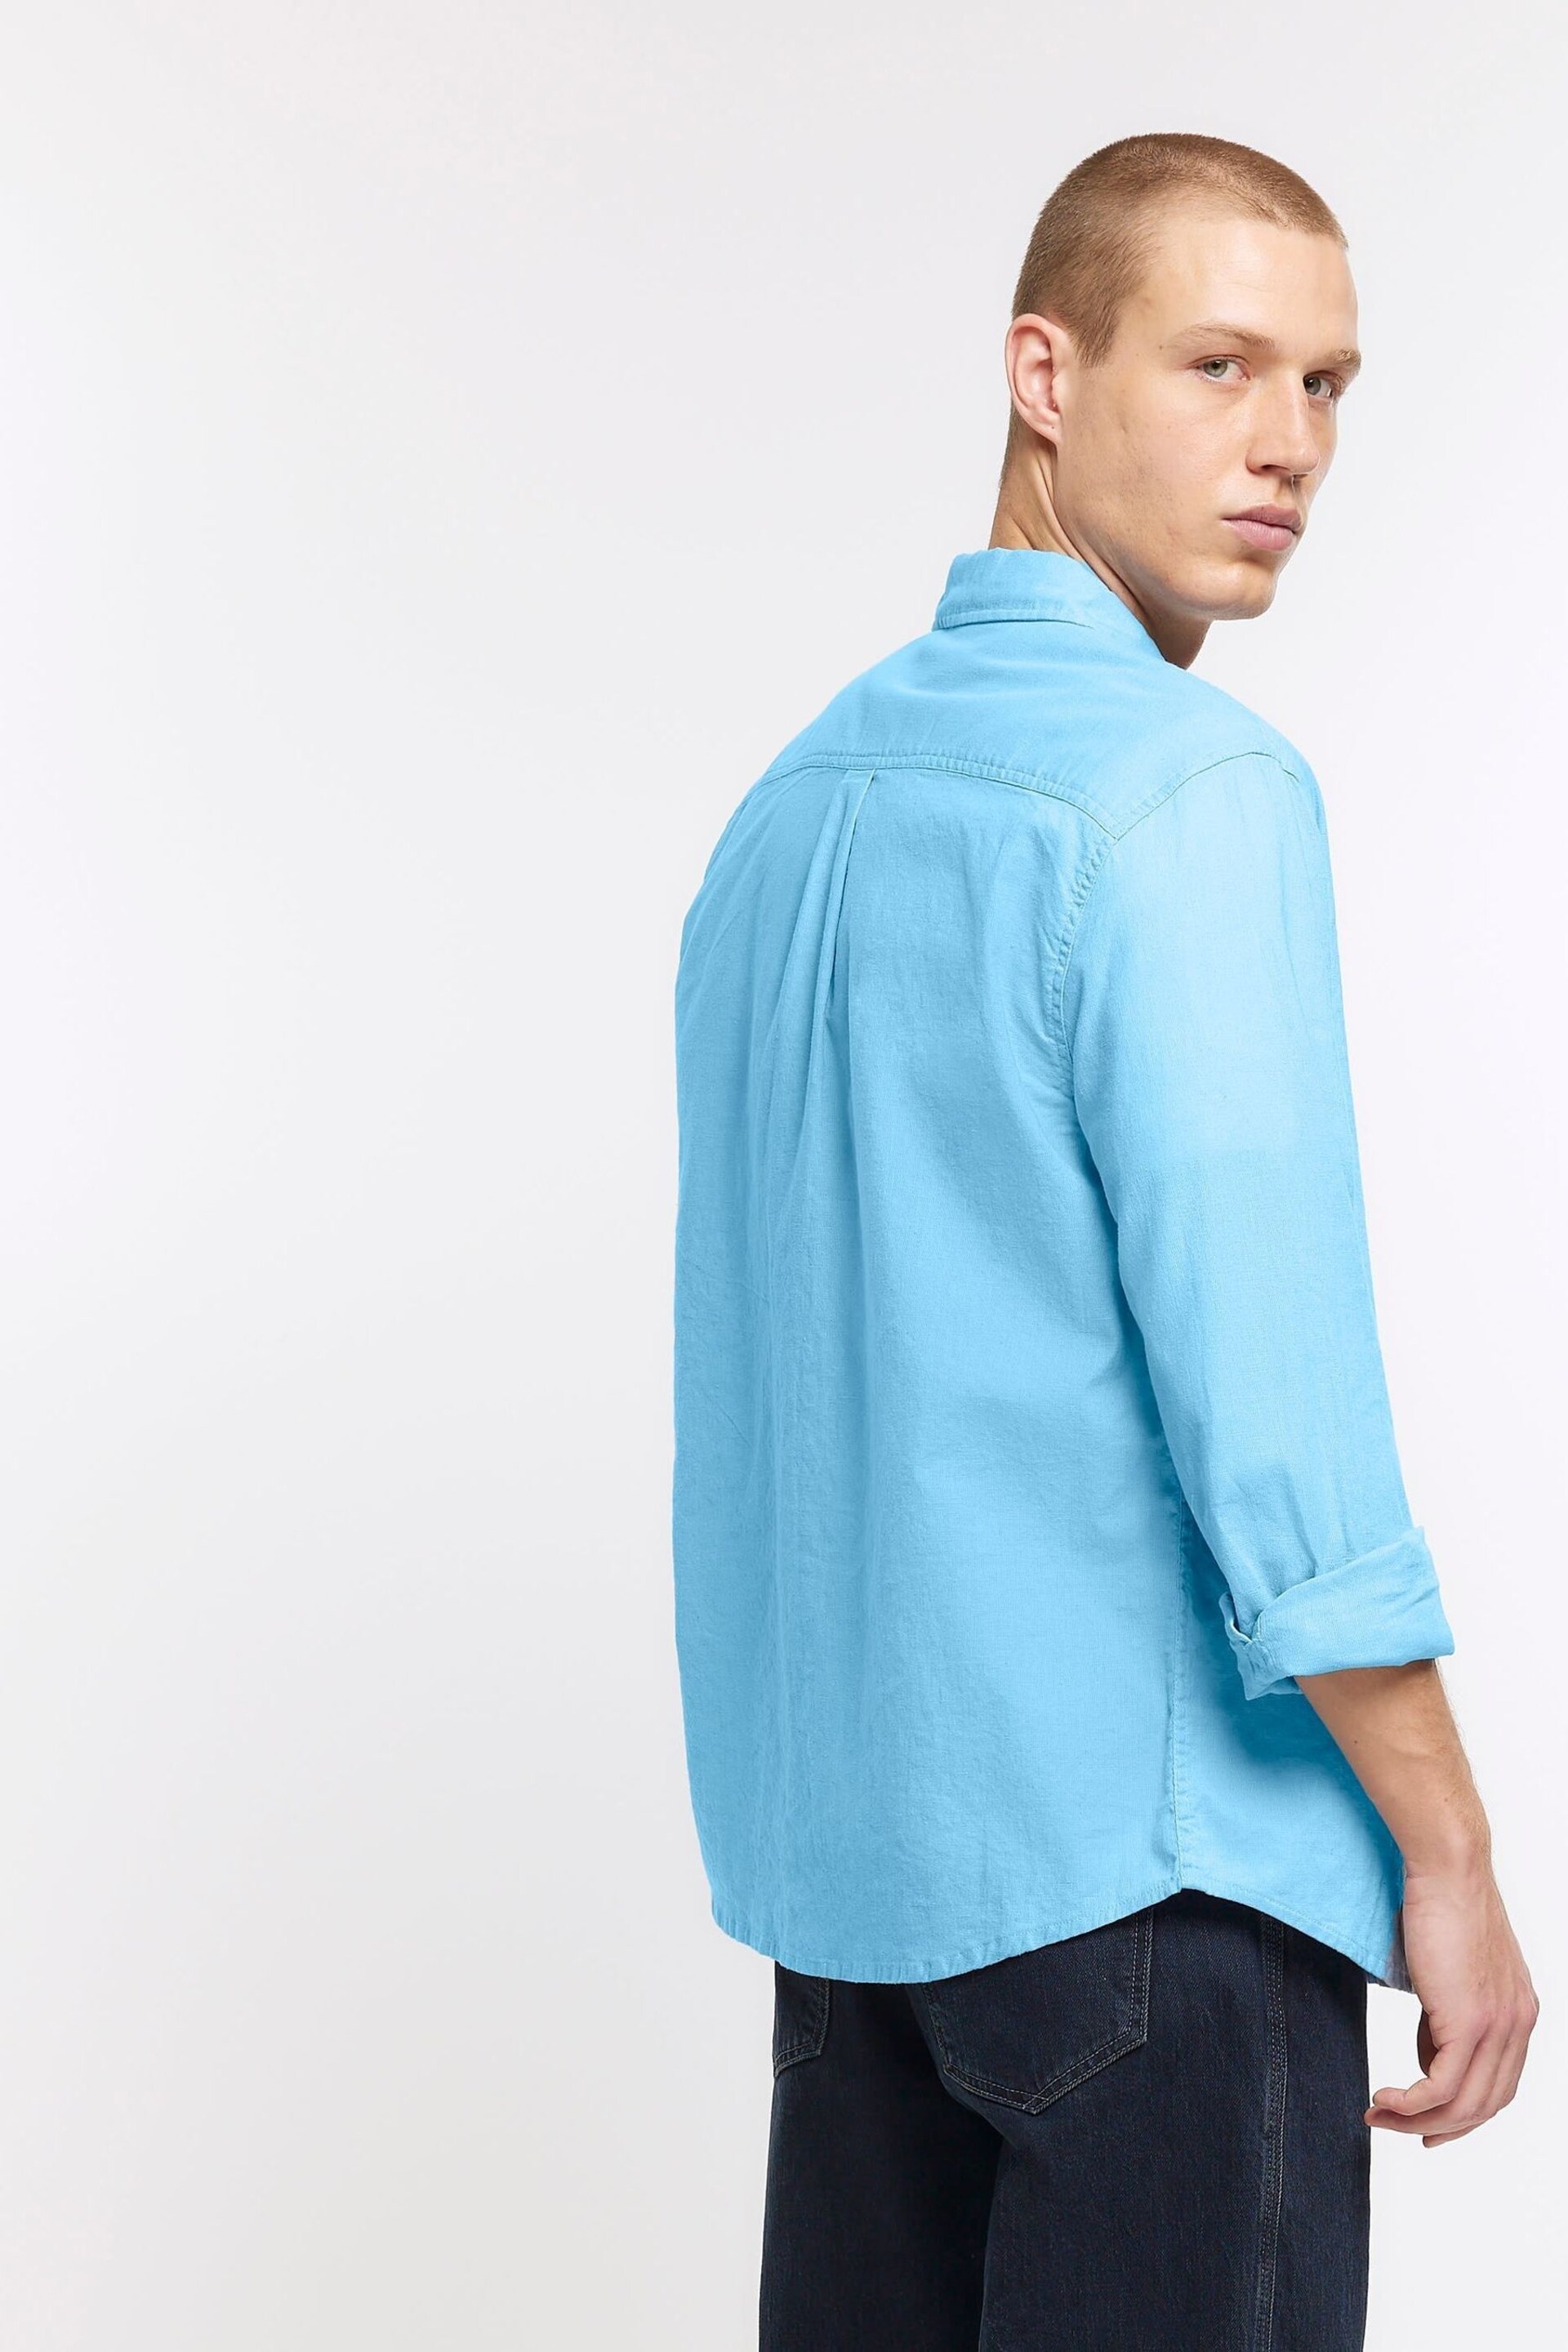 River Island Blue Long Sleeve Linen Shirt - Image 2 of 4